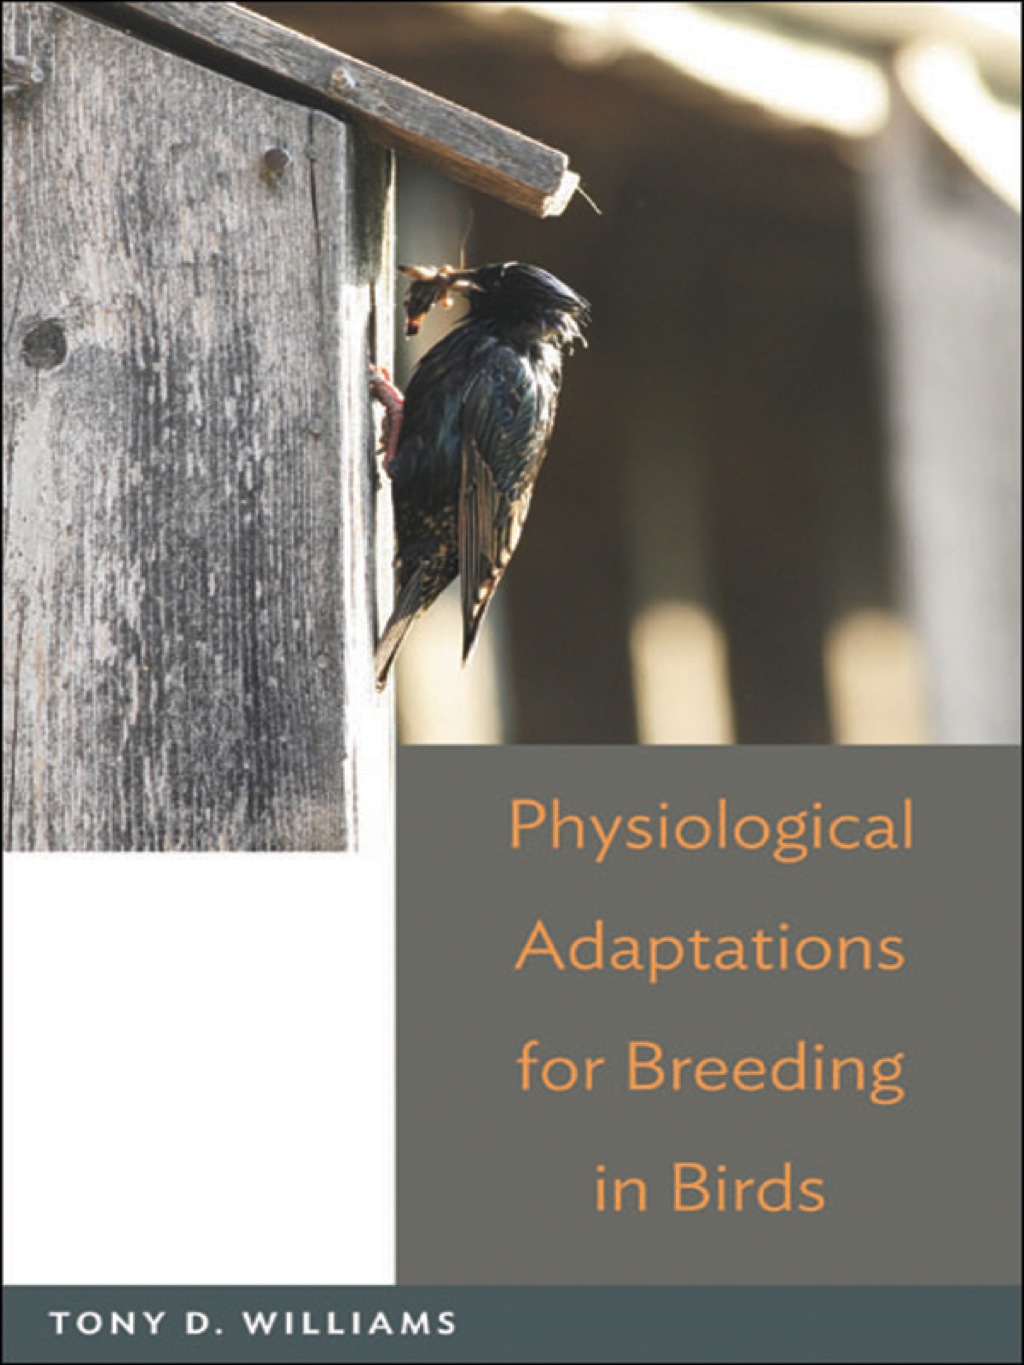 Physiological Adaptations for Breeding in Birds (eBook Rental) - Tony D. Williams,